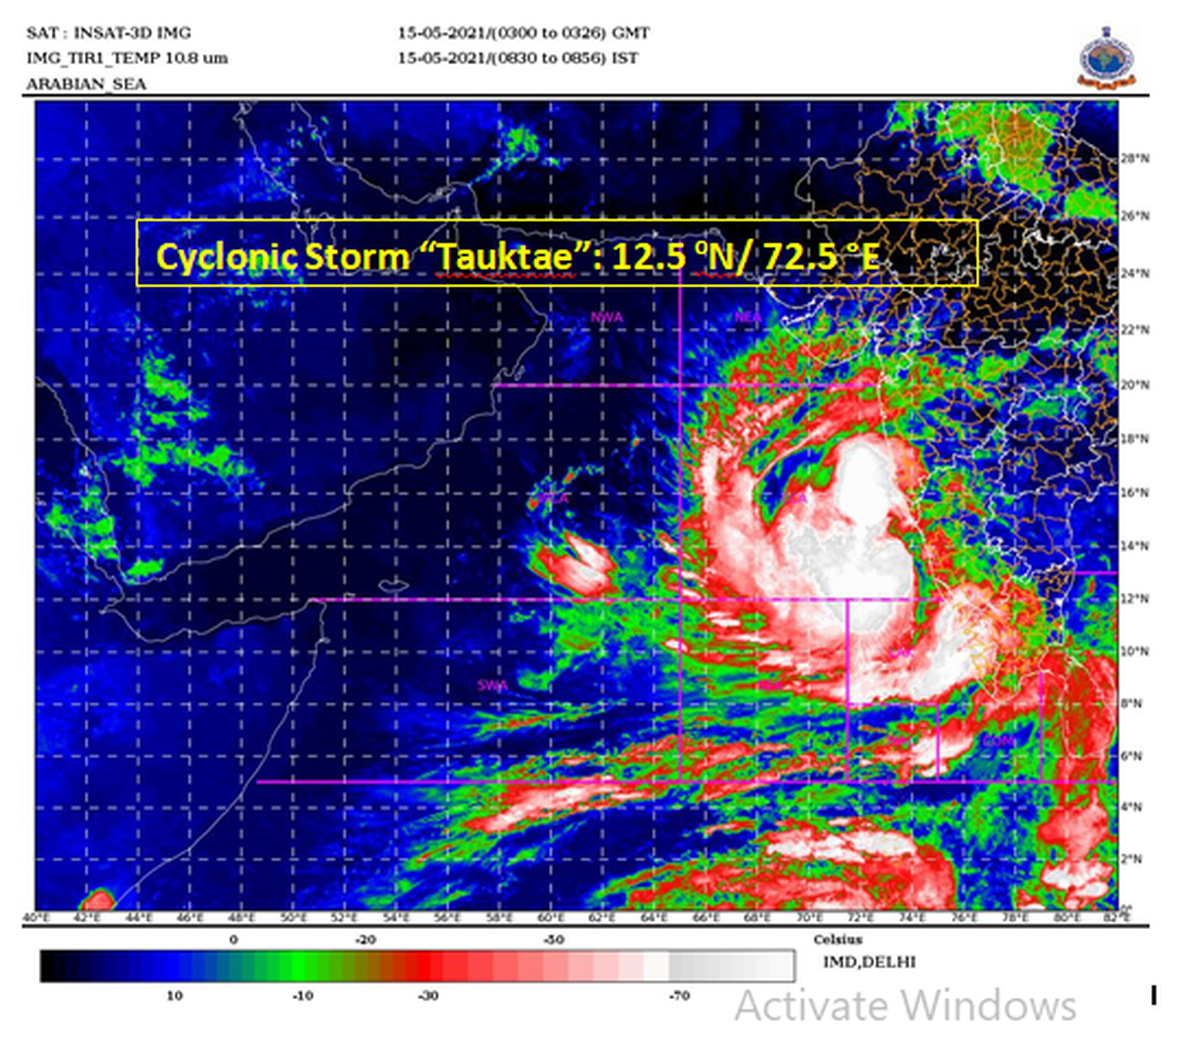 Cyclonic Storm “Tauktae” . Image source: twitter.com / @Indiametdept